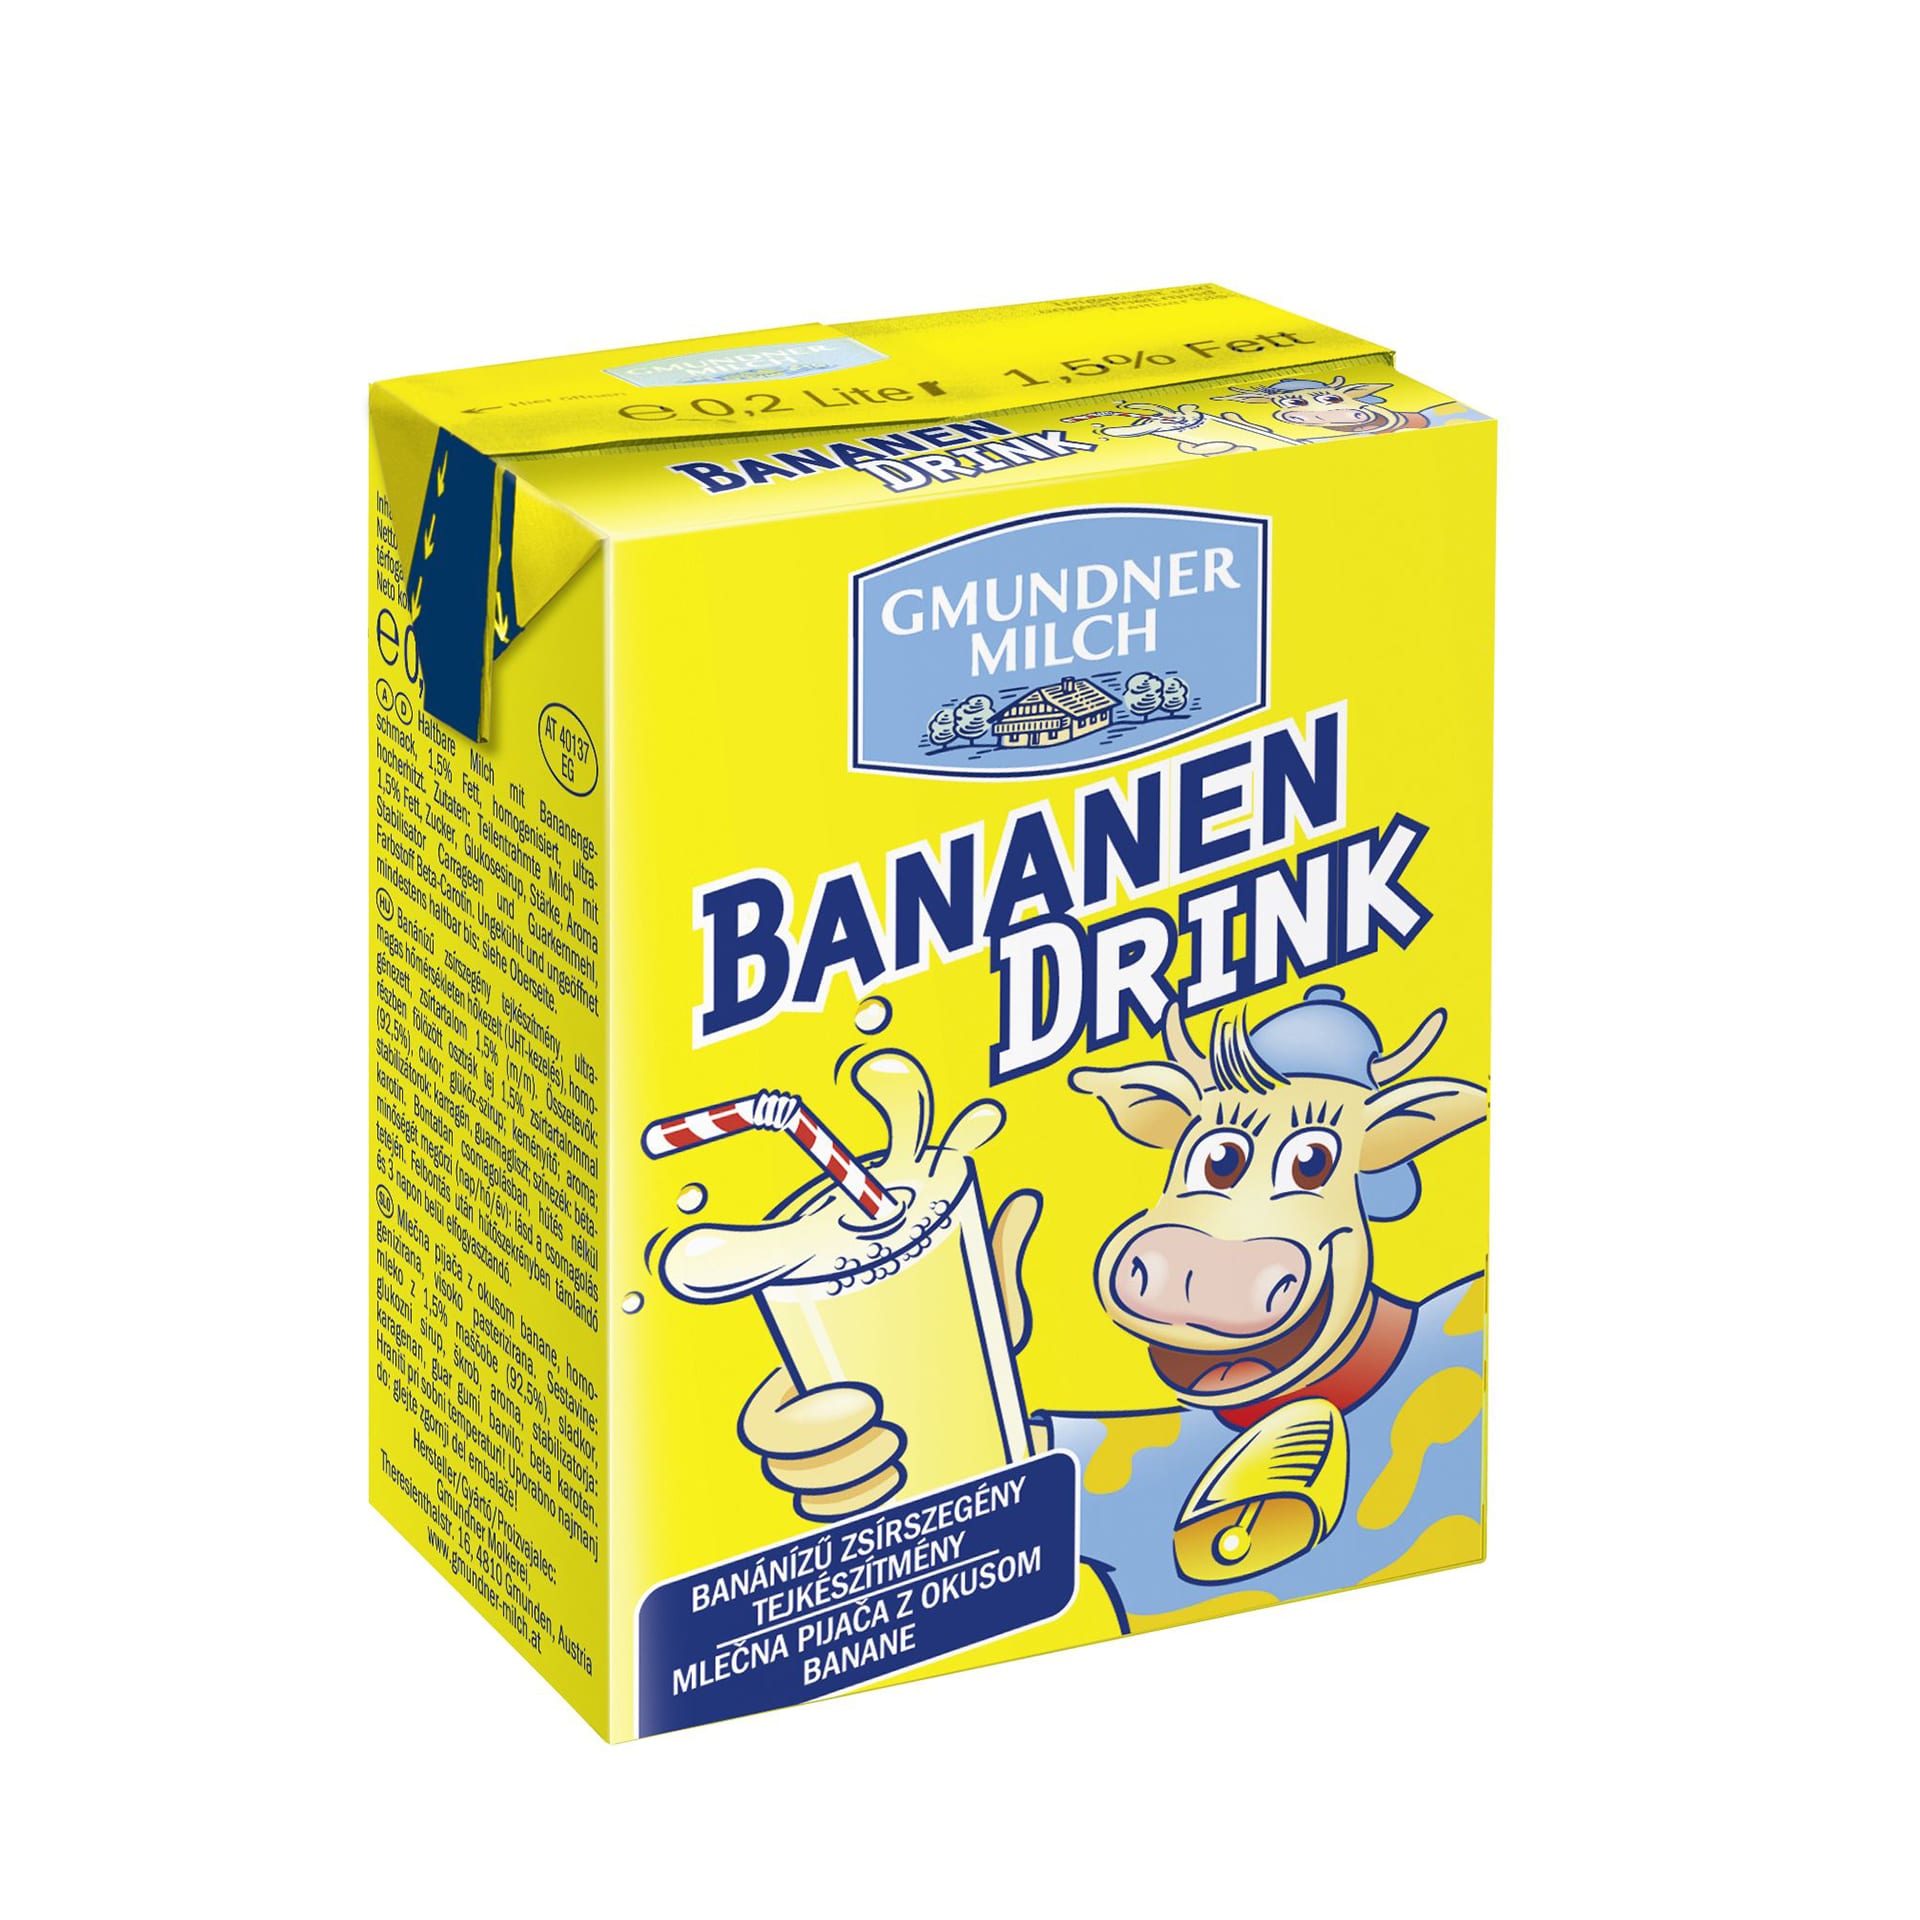 Haltbarer Bananen Drink 1,5%